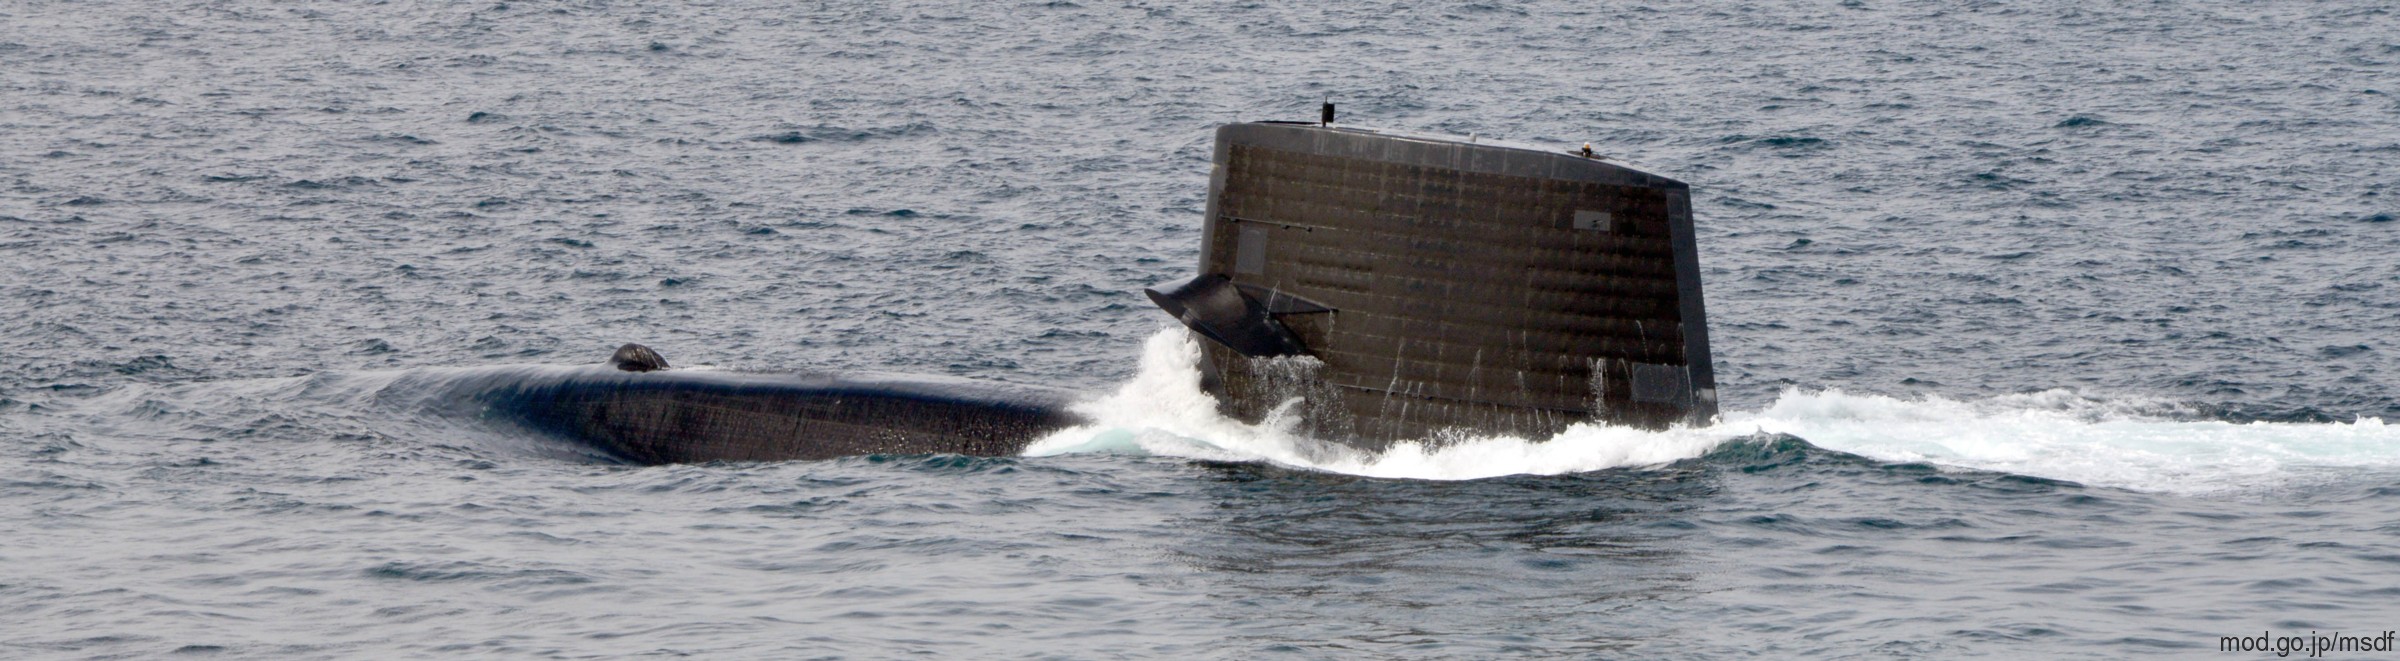 ss-506 js kokuryu 16ss soryu class attack submarine ssk japan maritime self defense force jmsdf 04